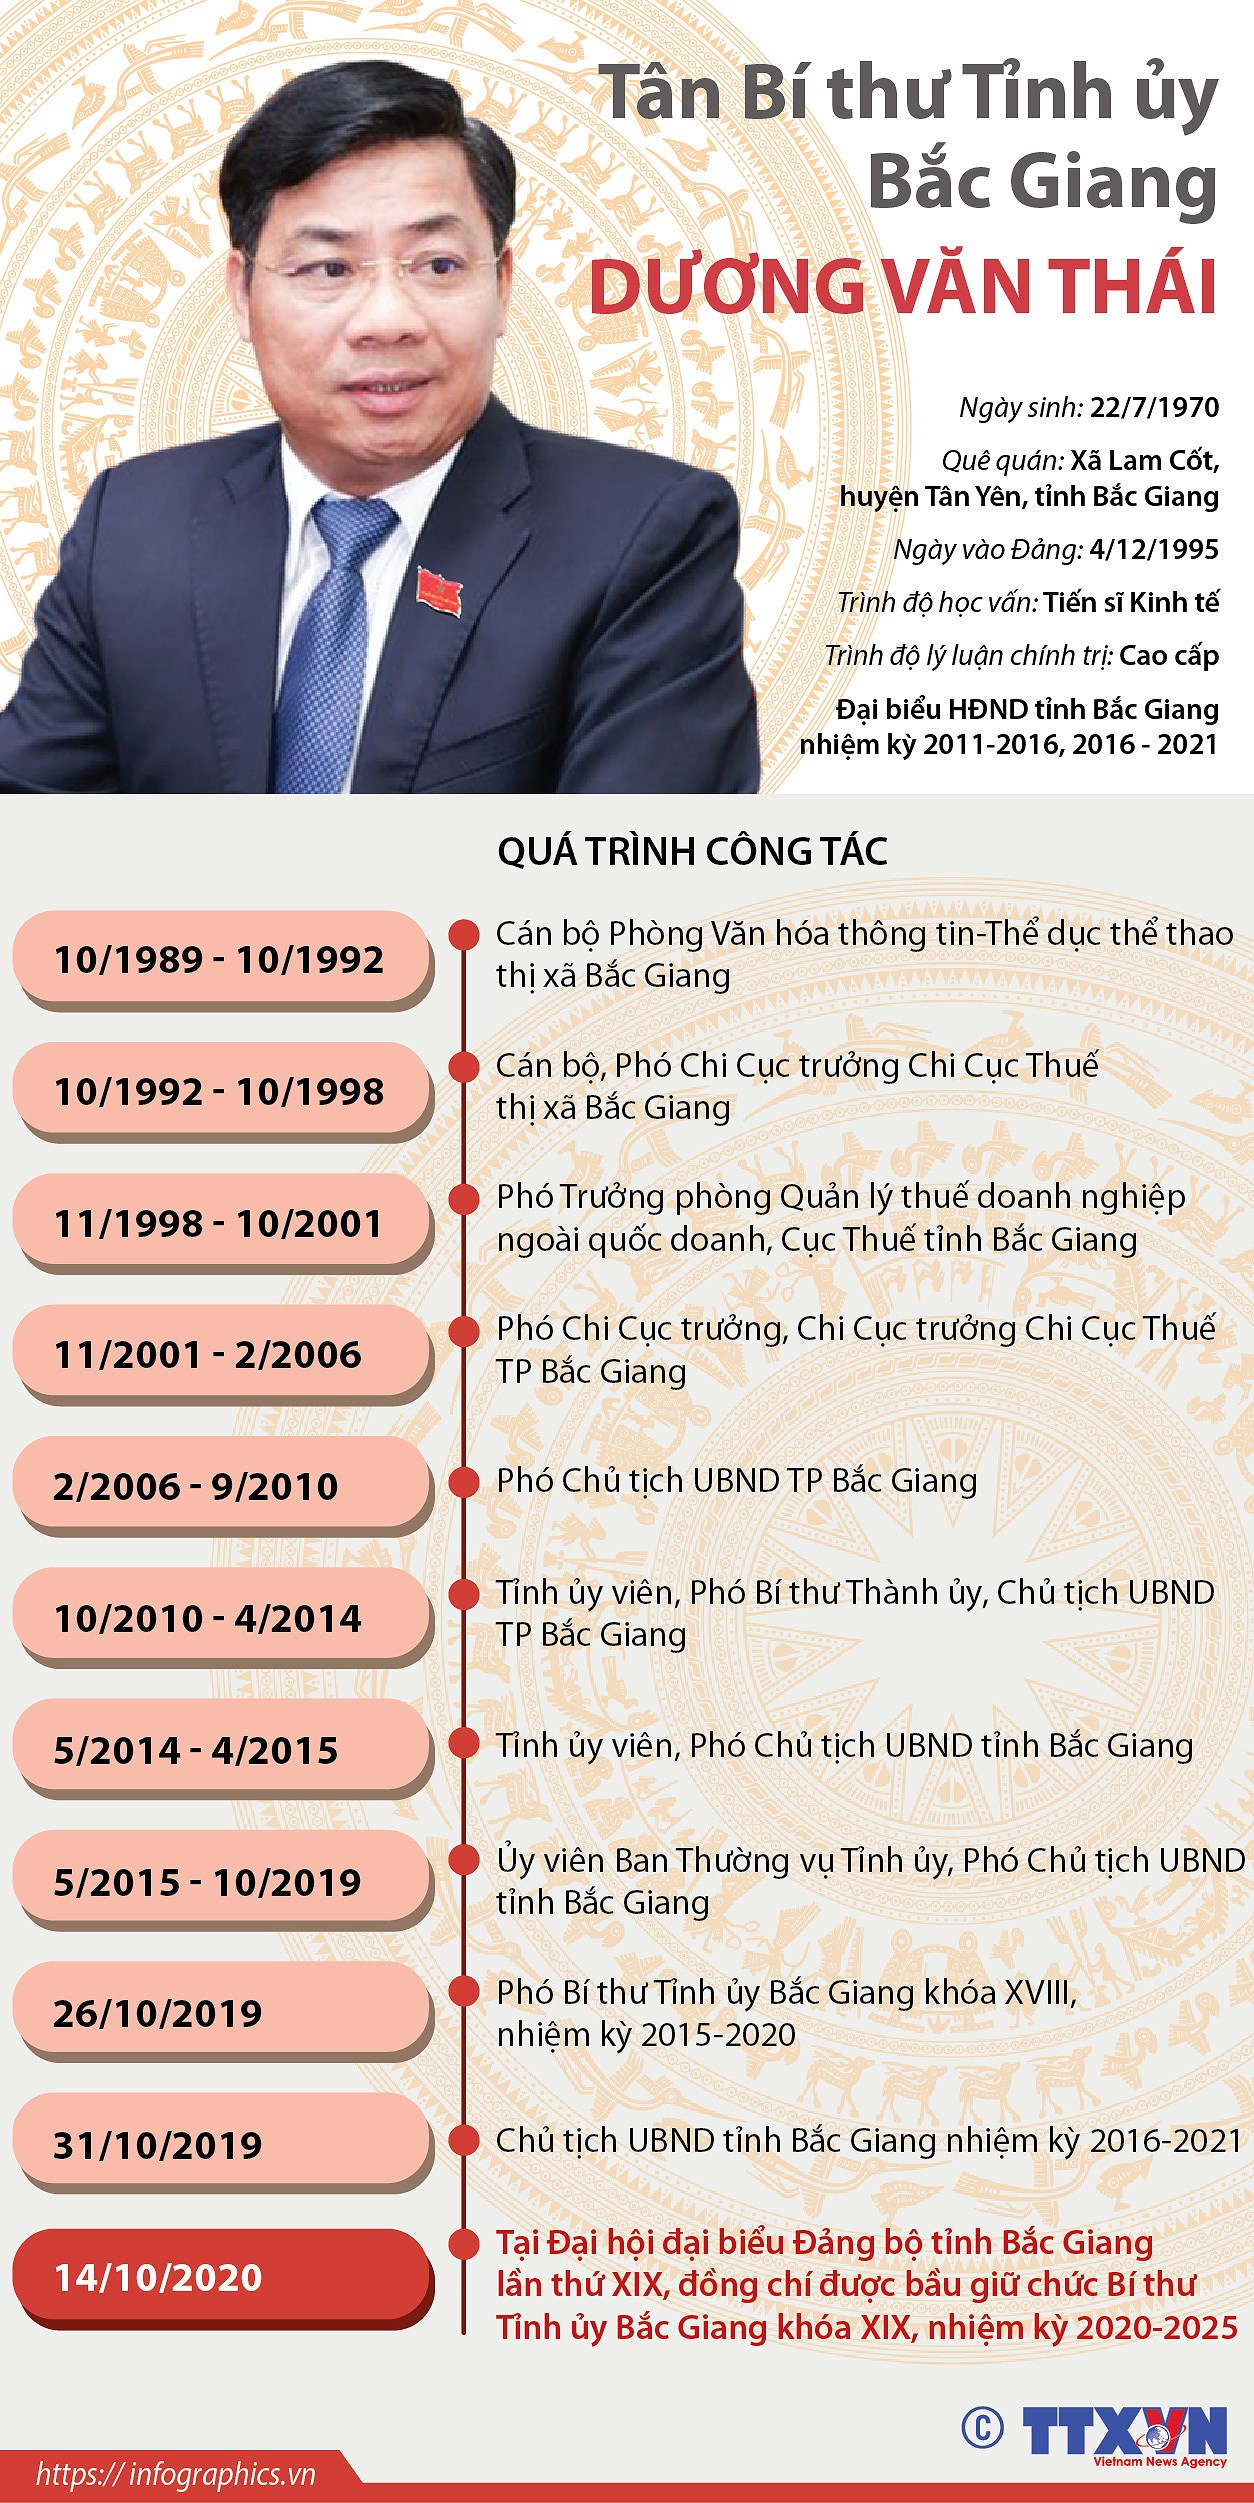 [Infographics] Tan Bi thu Tinh uy Bac Giang Duong Van Thai hinh anh 1